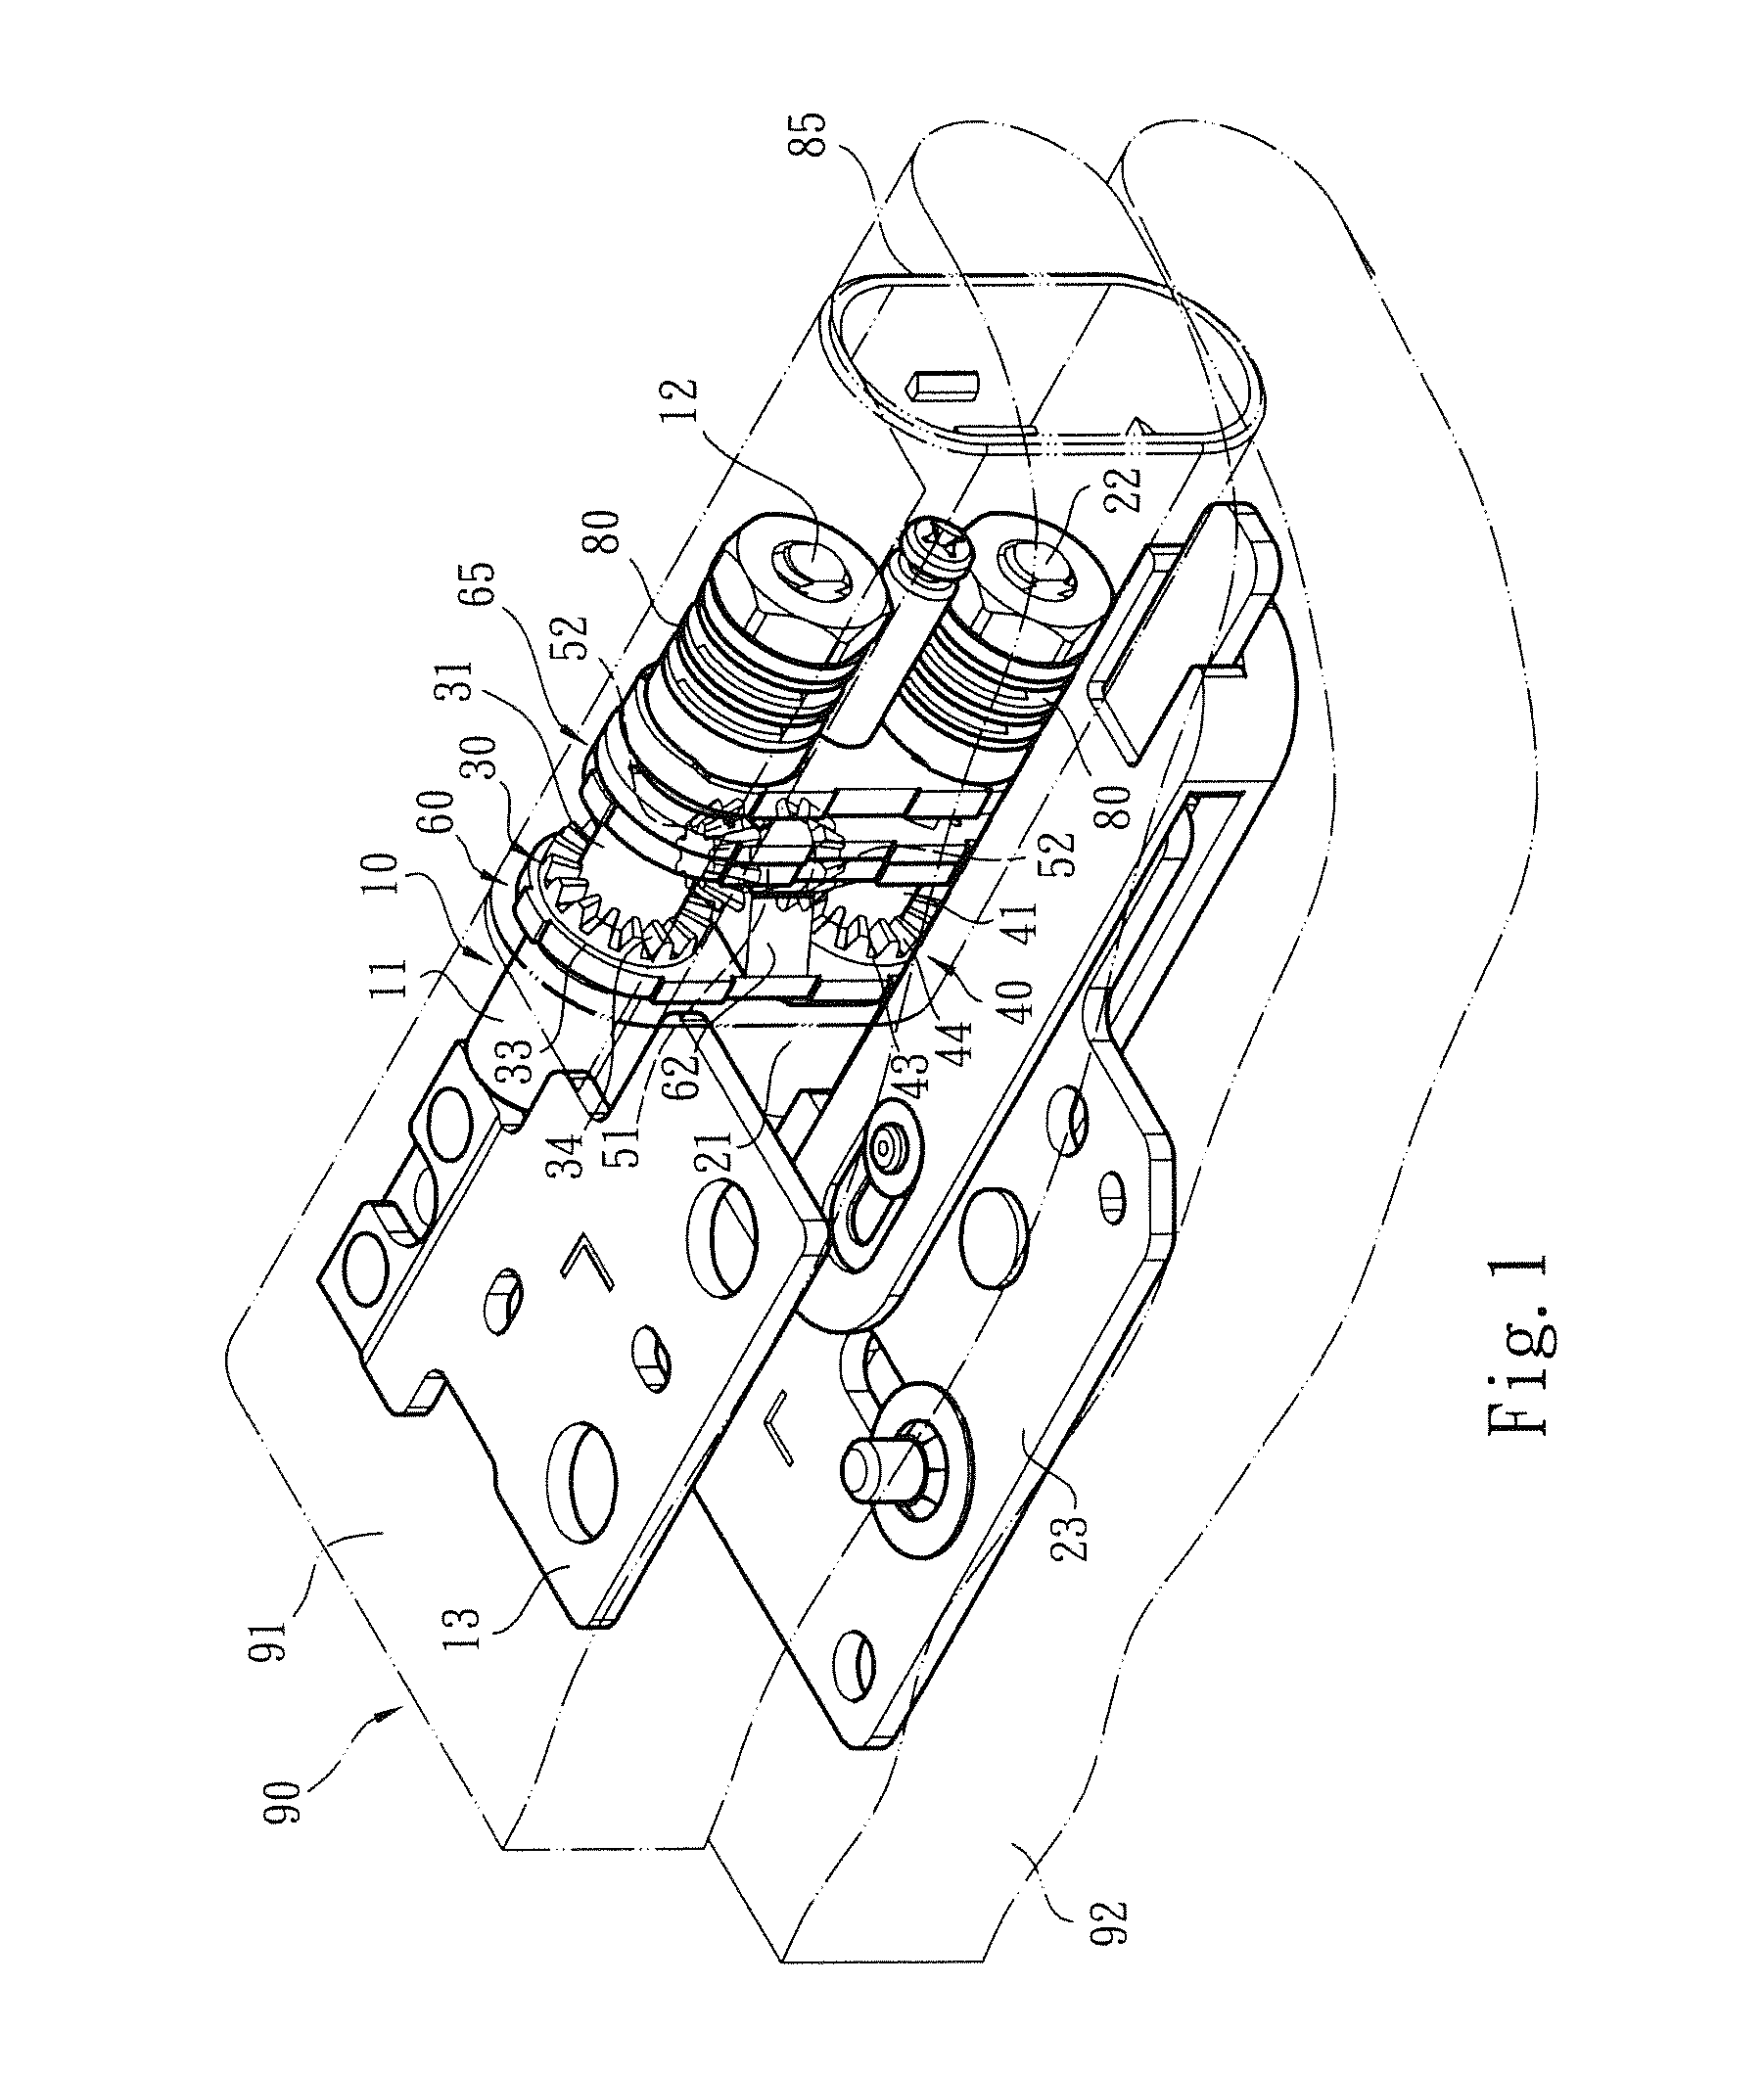 Pivot mechanism of synchronous hinge device